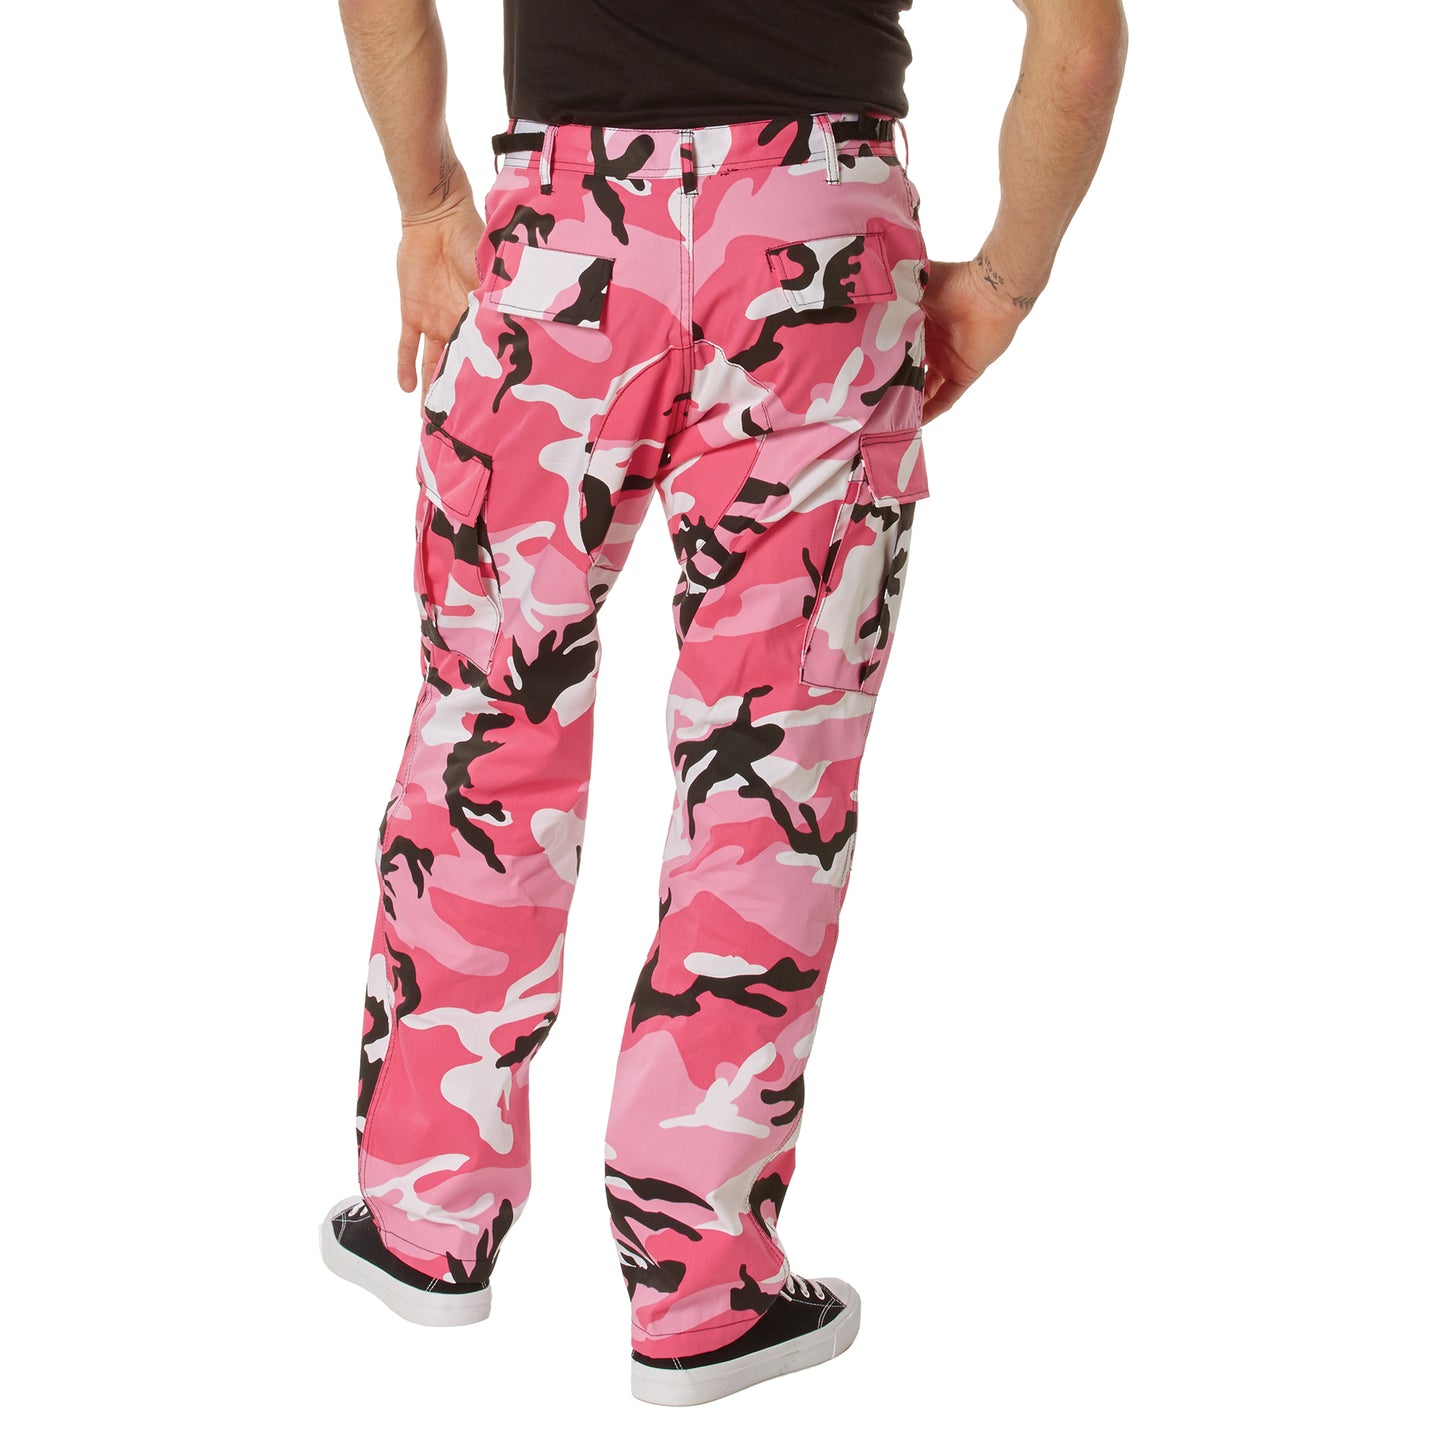 Rothco Color Camo Tactical BDU Pants - Pink Camo